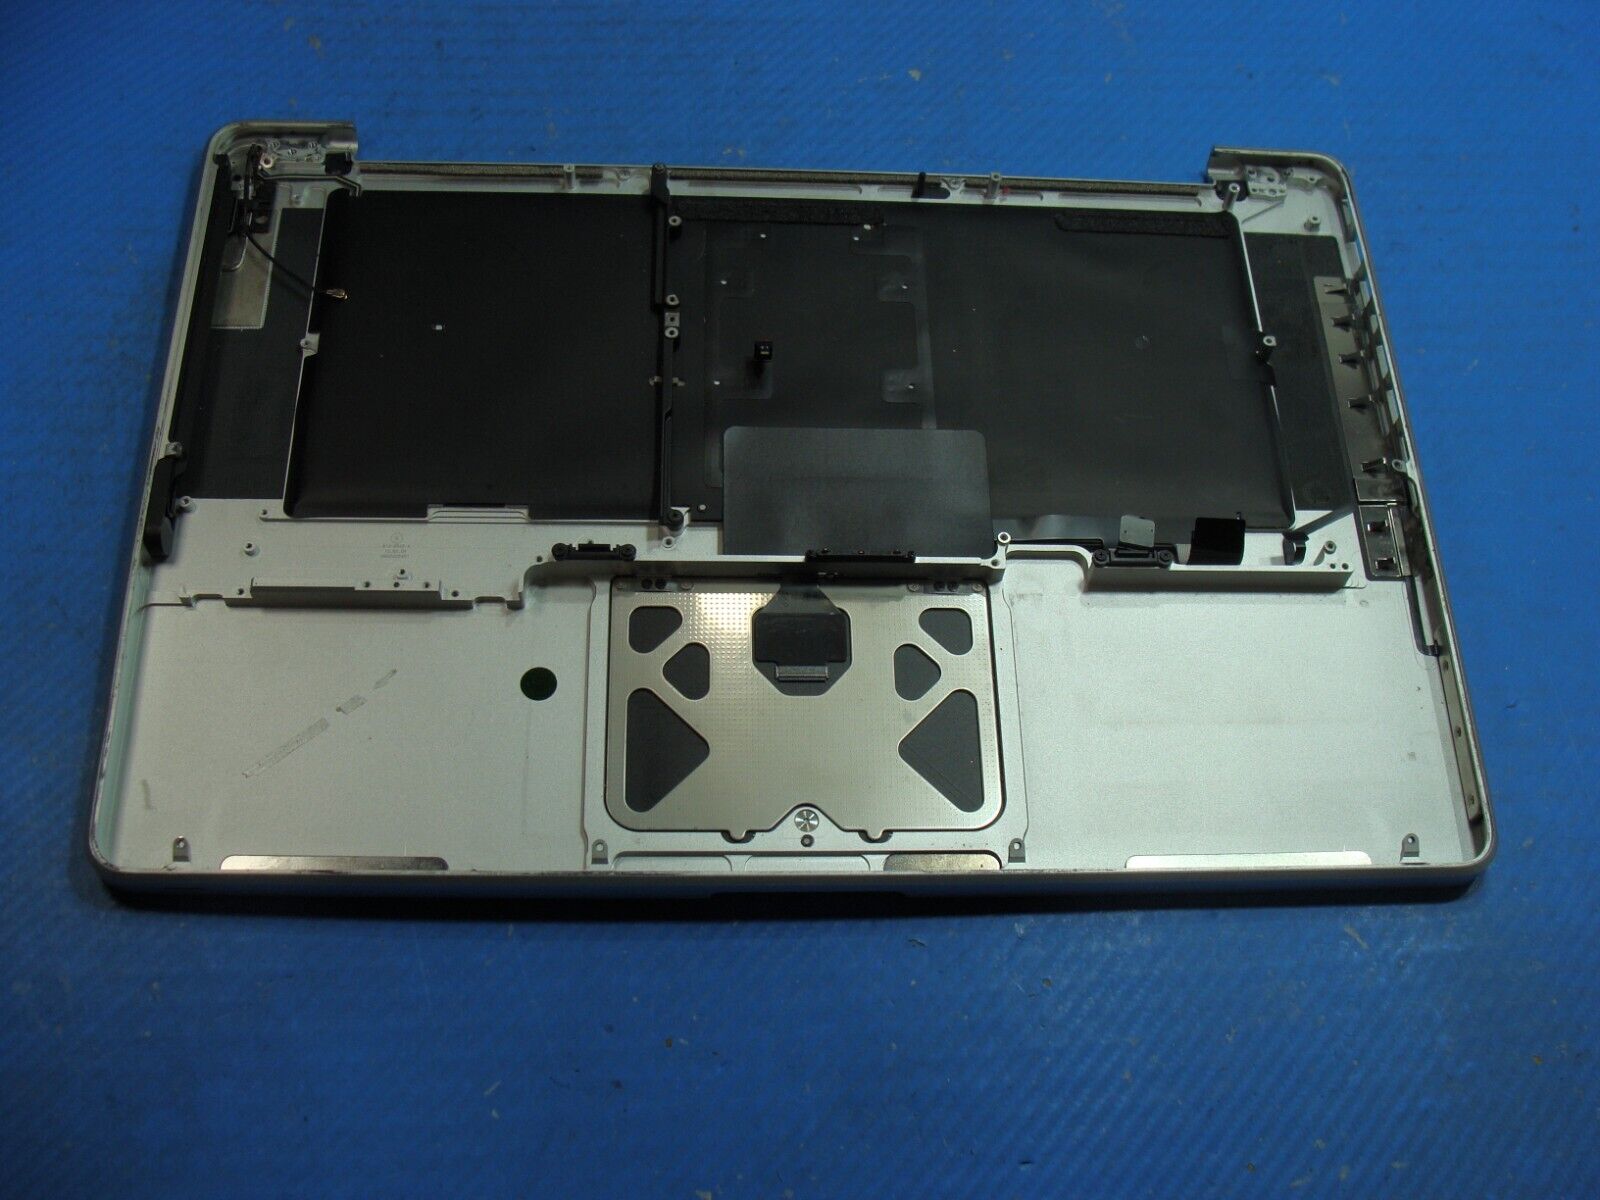 MacBook Pro A1286 15 Mid 2012 MD103LL/A Top Case w/Keyboard Trackpad 661-6509